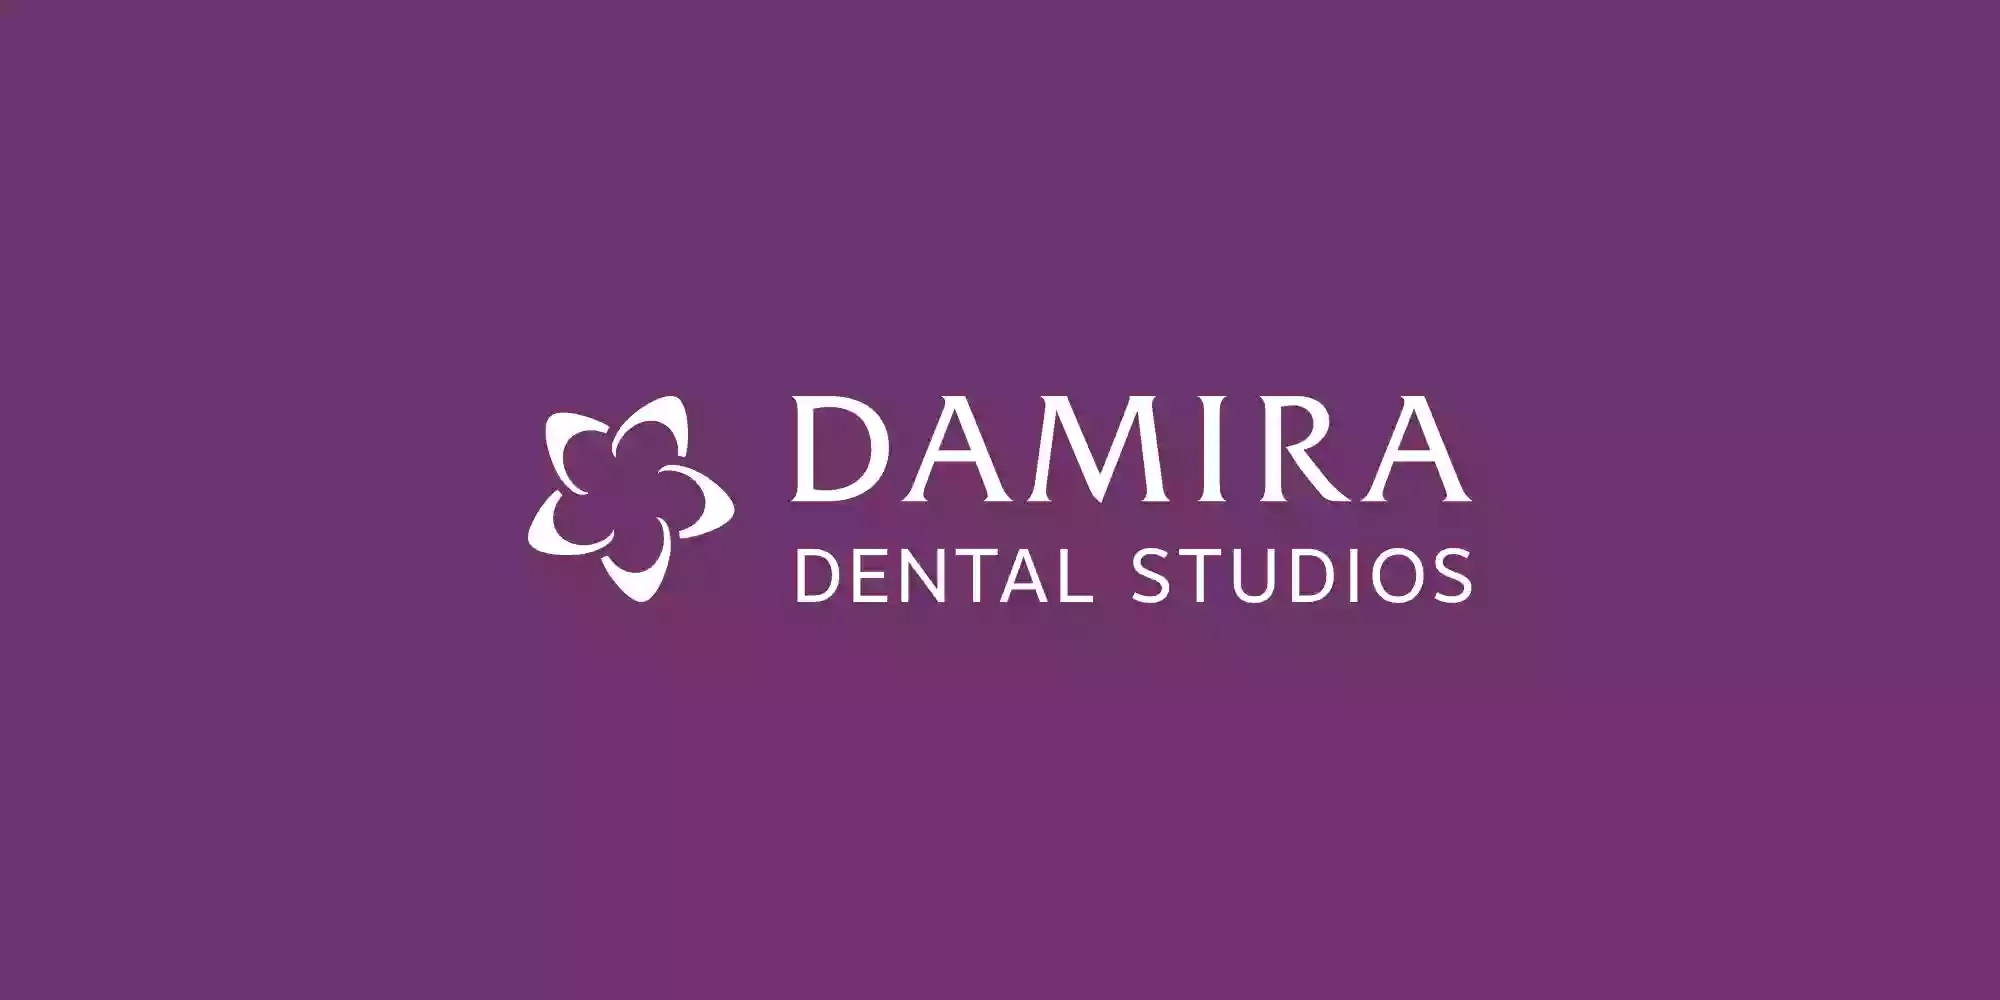 Damira Bank Buildings Dental Practice